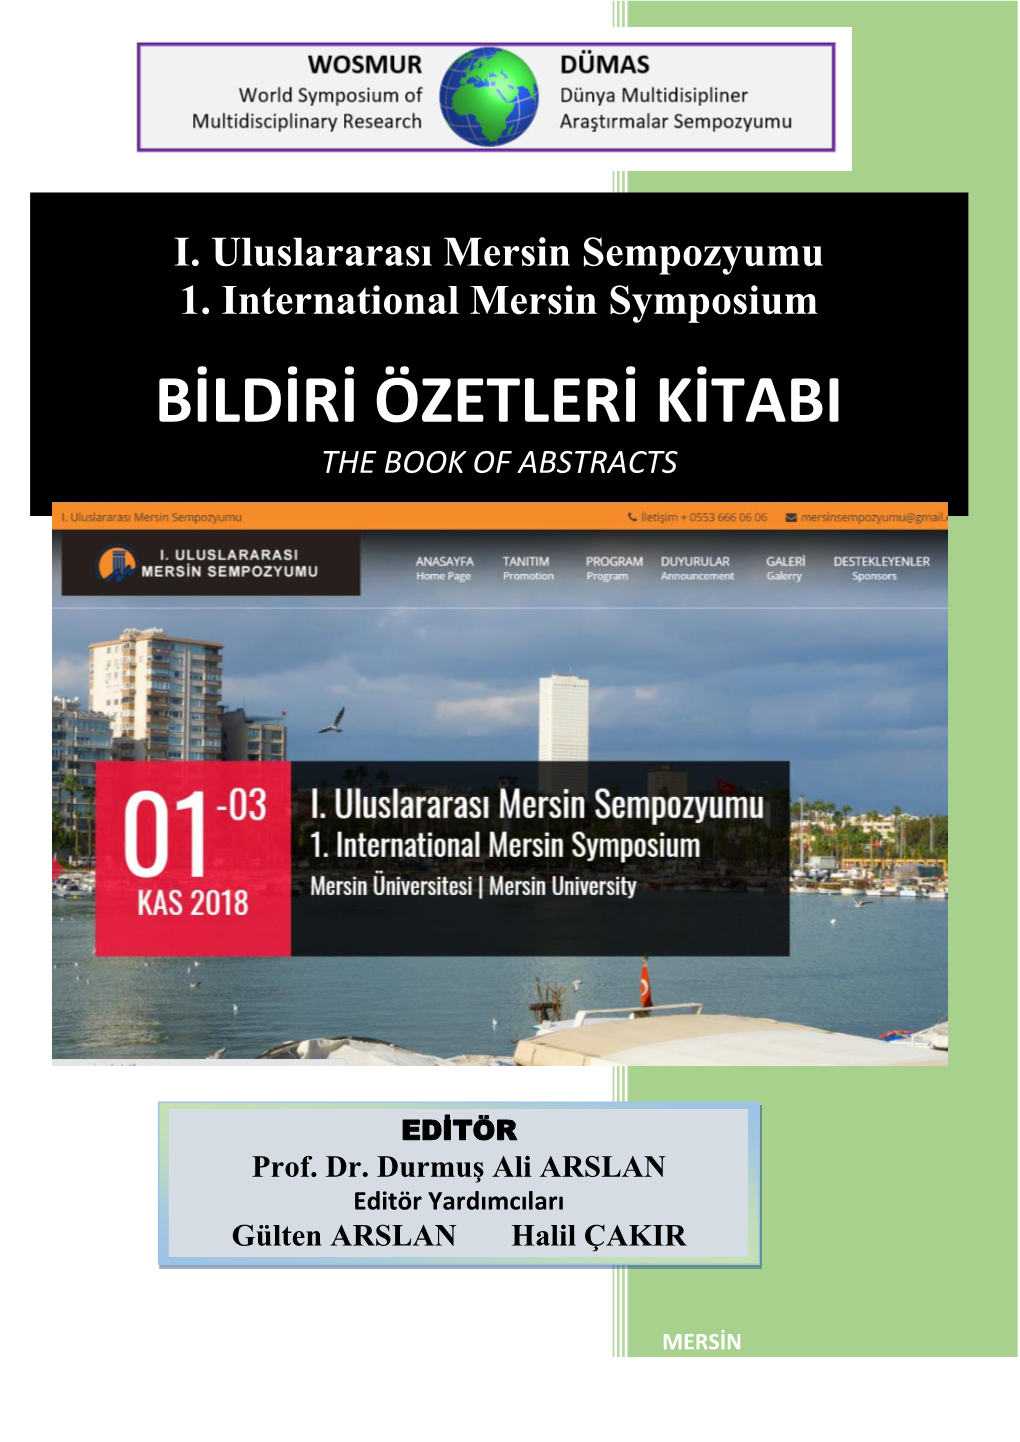 I. Uluslararası Mersin Sempozyumu 1. International Mersin Symposium